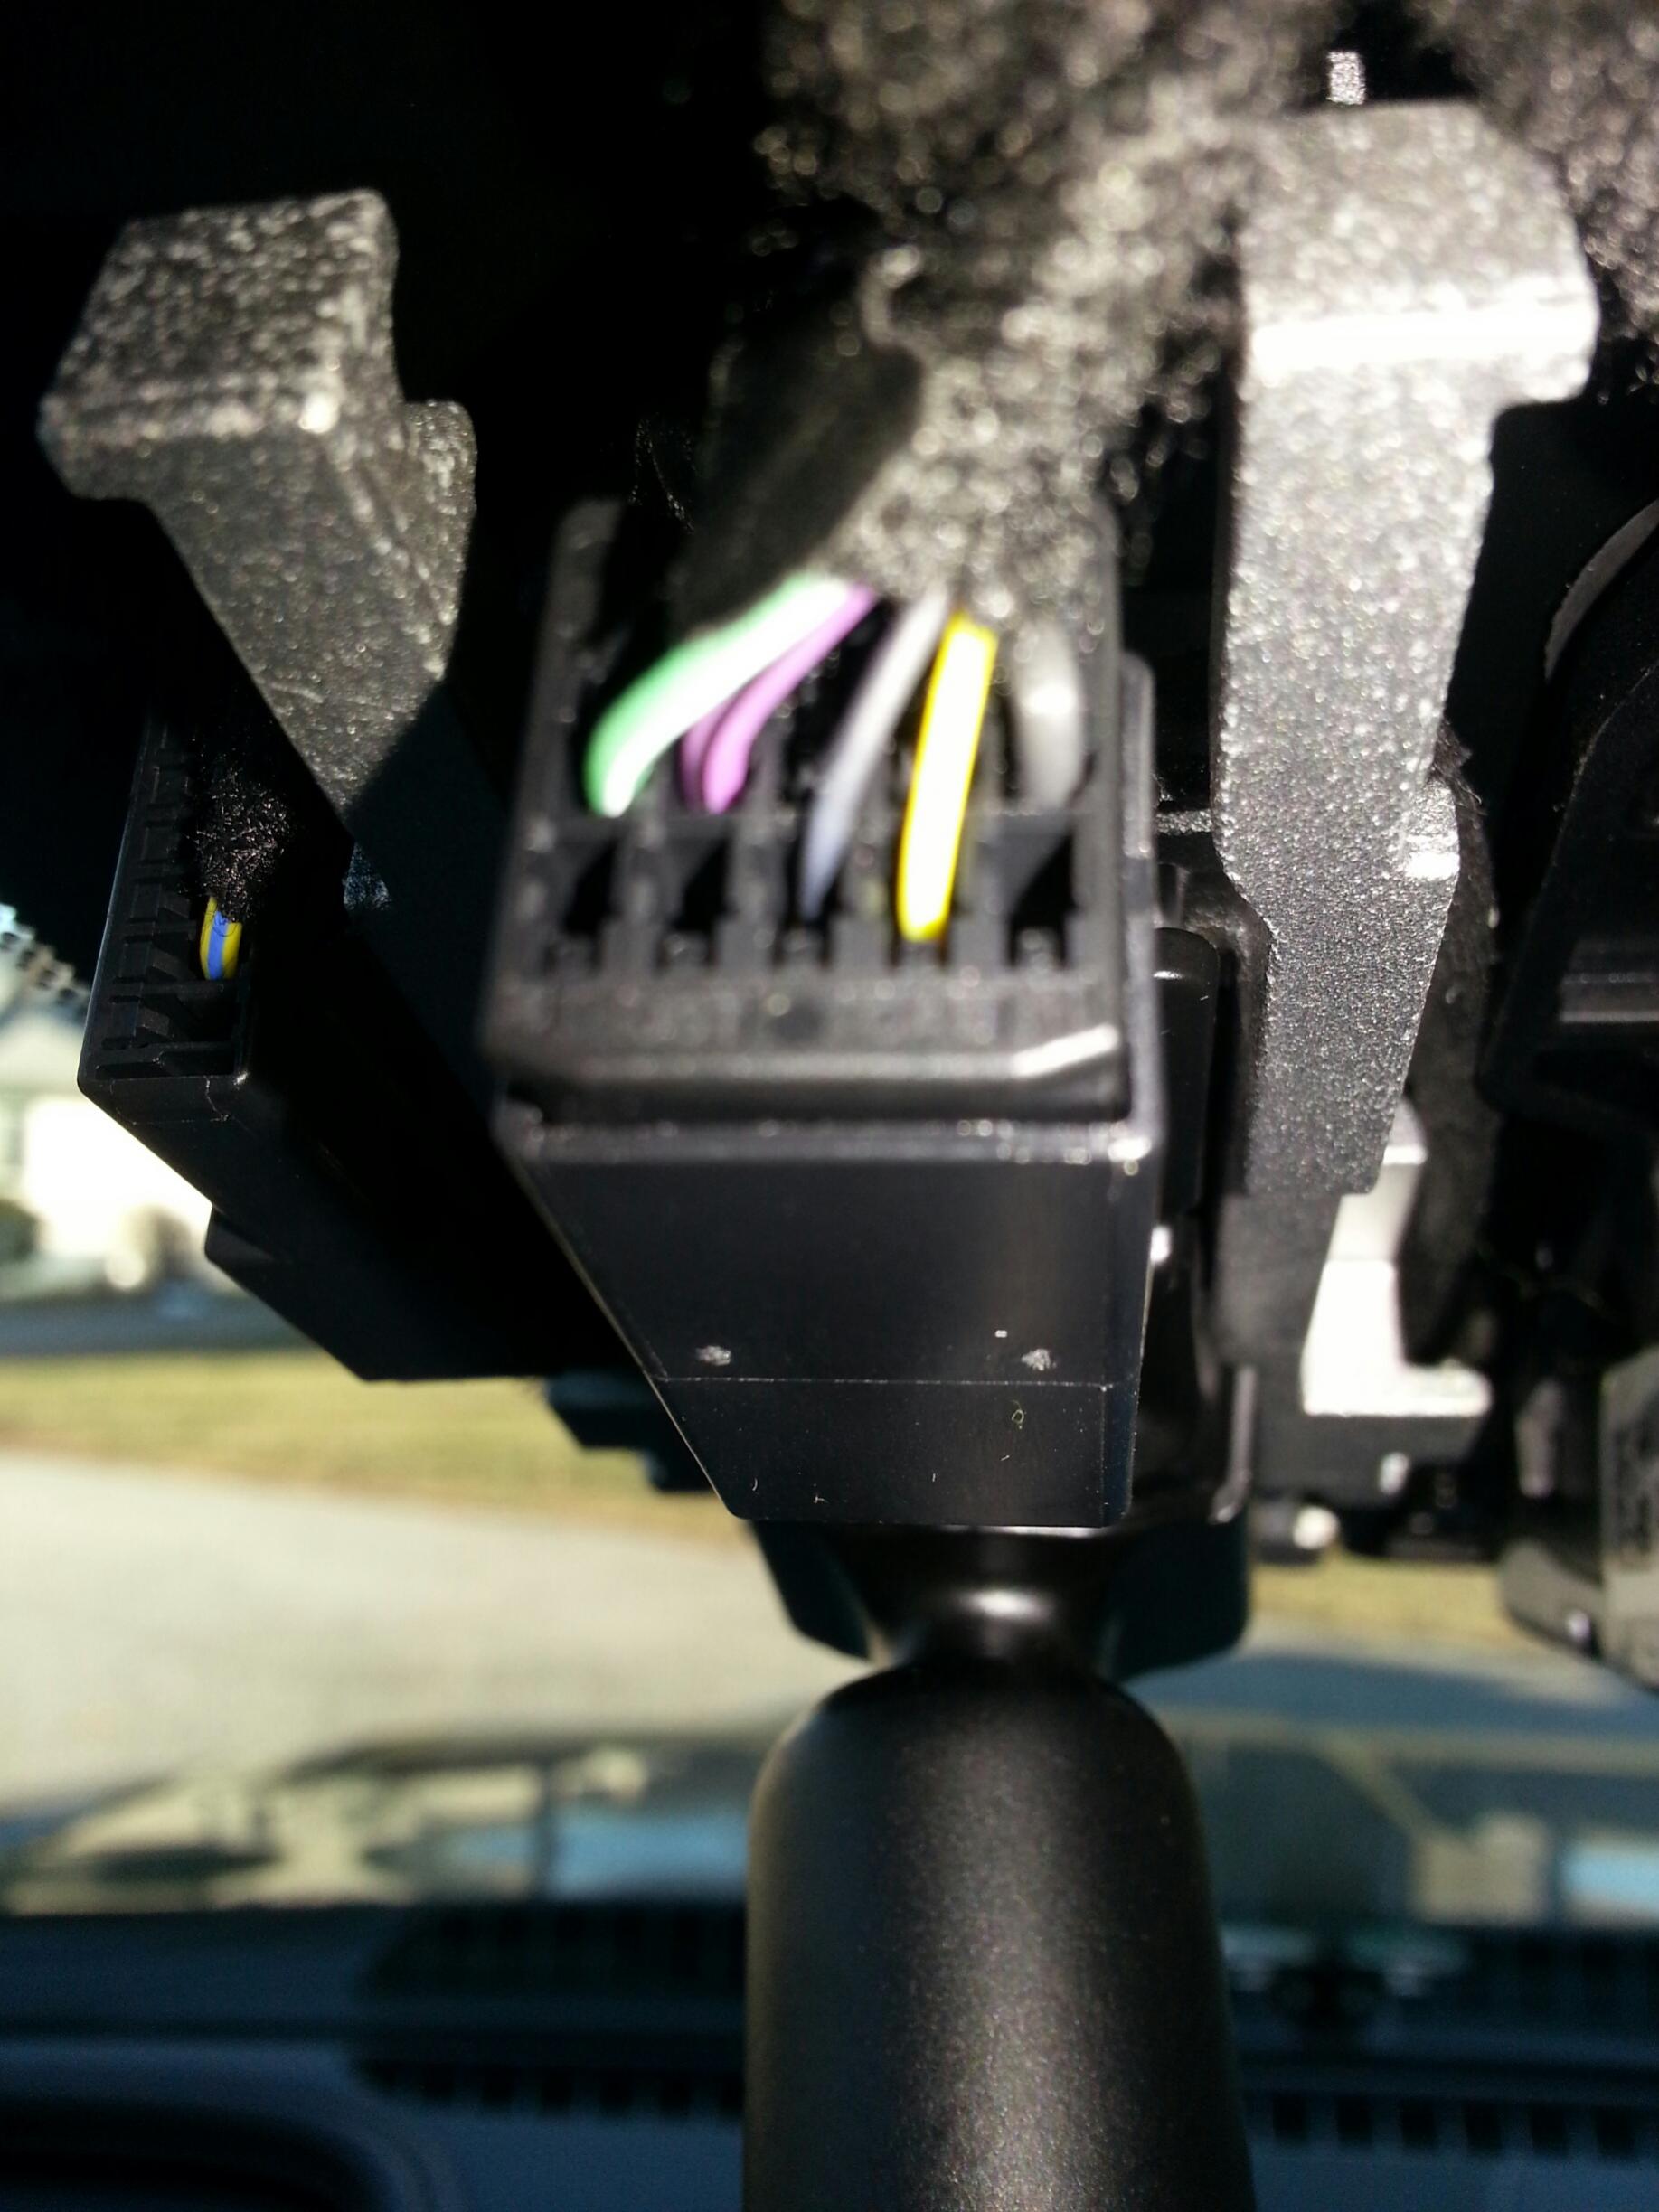 2014 Impala LTZ Mirror Tap/ Blend Mount for Radar Detector ... 2011 silverado fuse box 